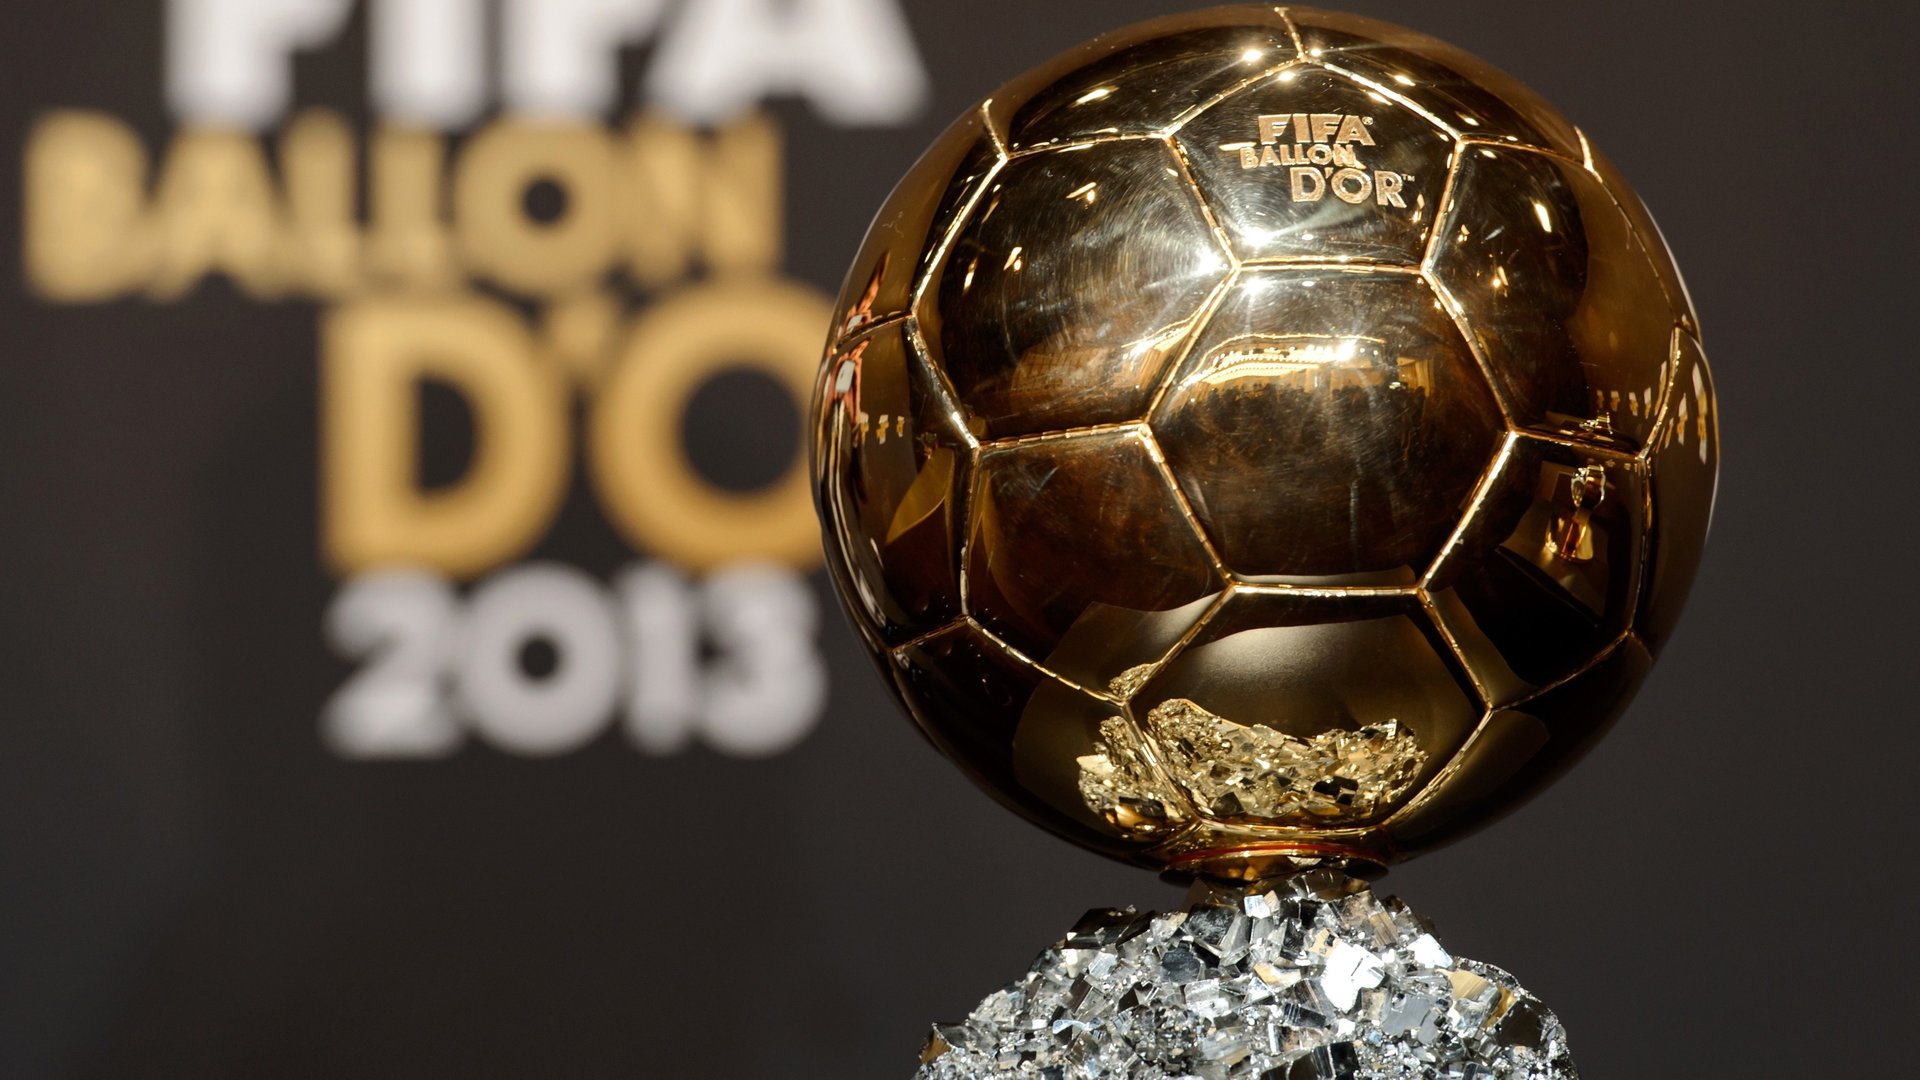 FIFA Ballon d'Or trophy - Goal.com1920 x 1080